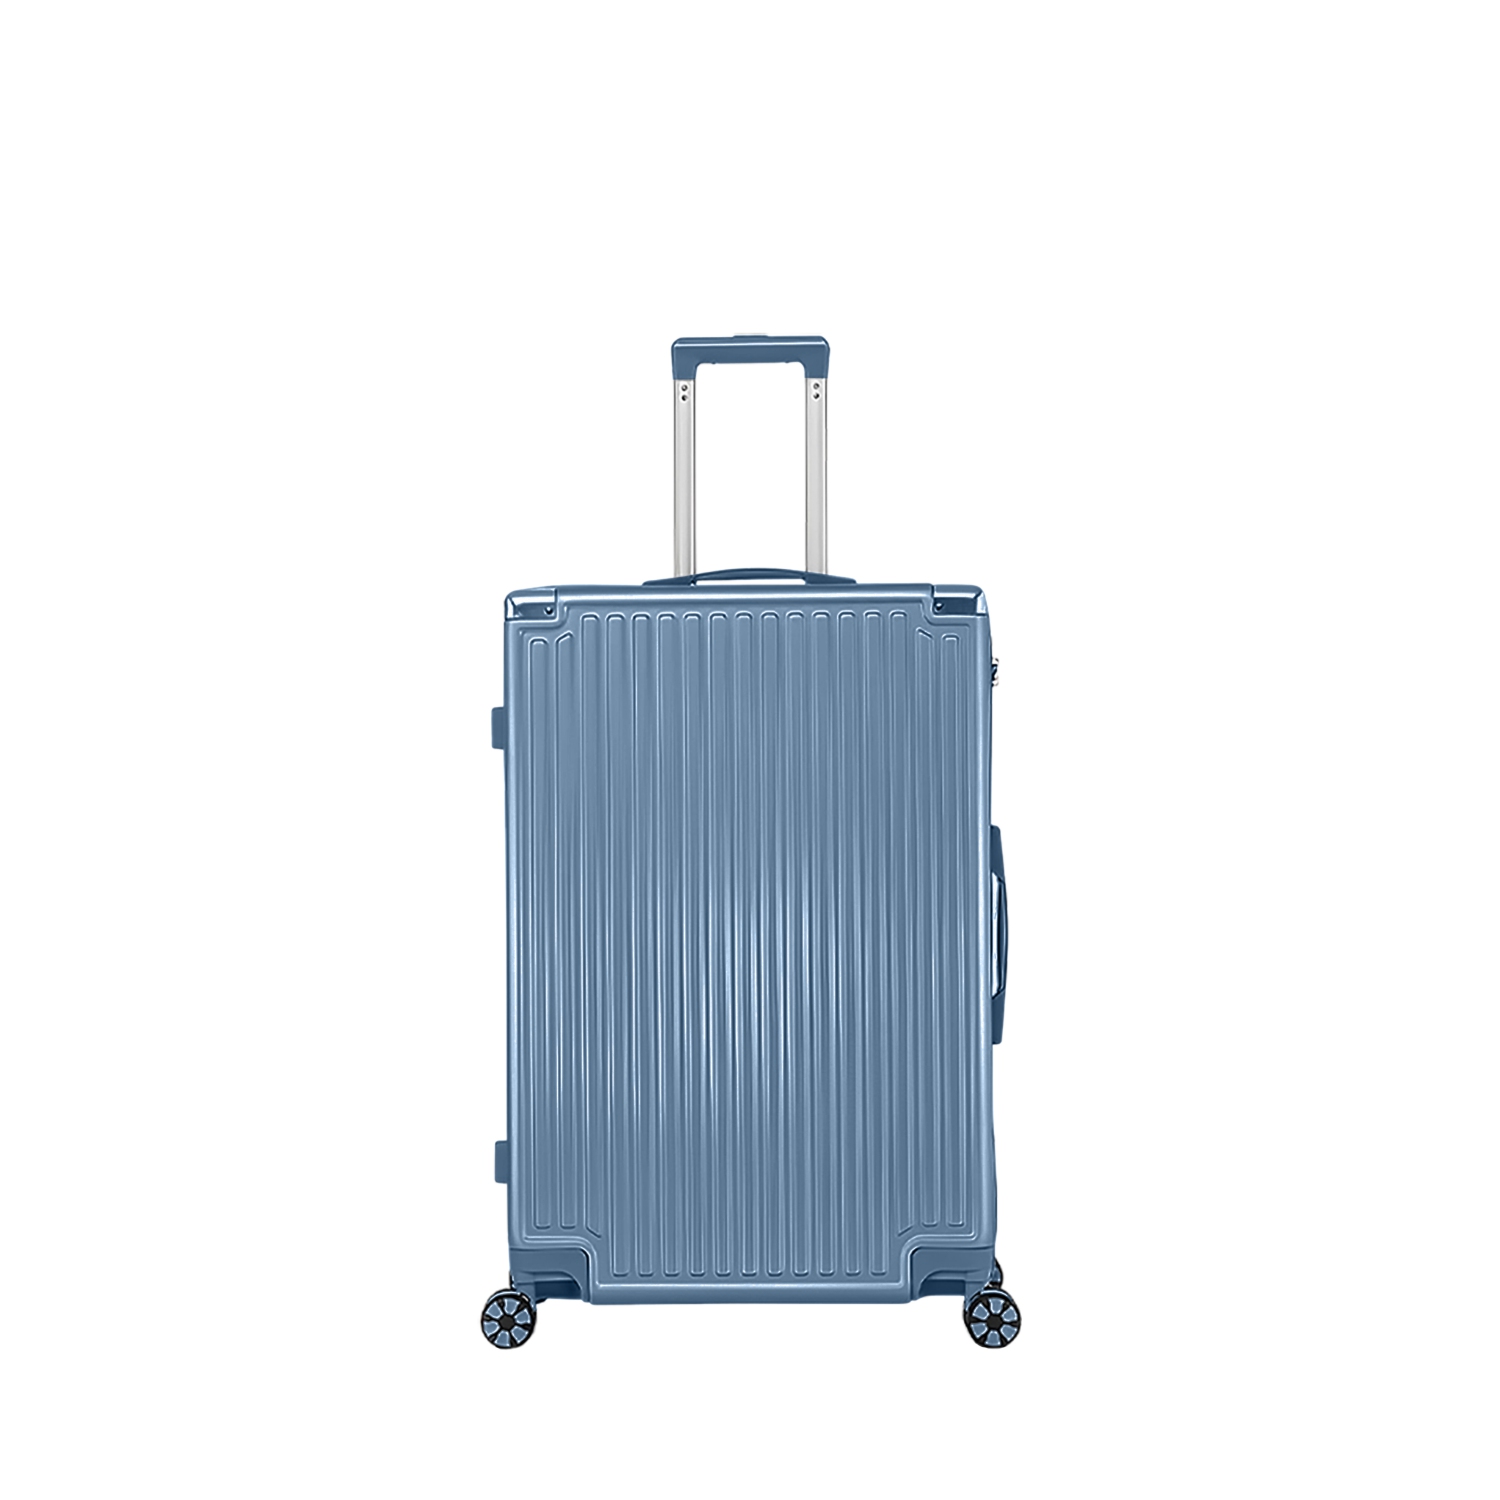 WINGOMART Luggage Lightweight Durable PC+ABS Hardshell, Double Spinner Wheels, TSA Lock - 24in - Coastal Blue